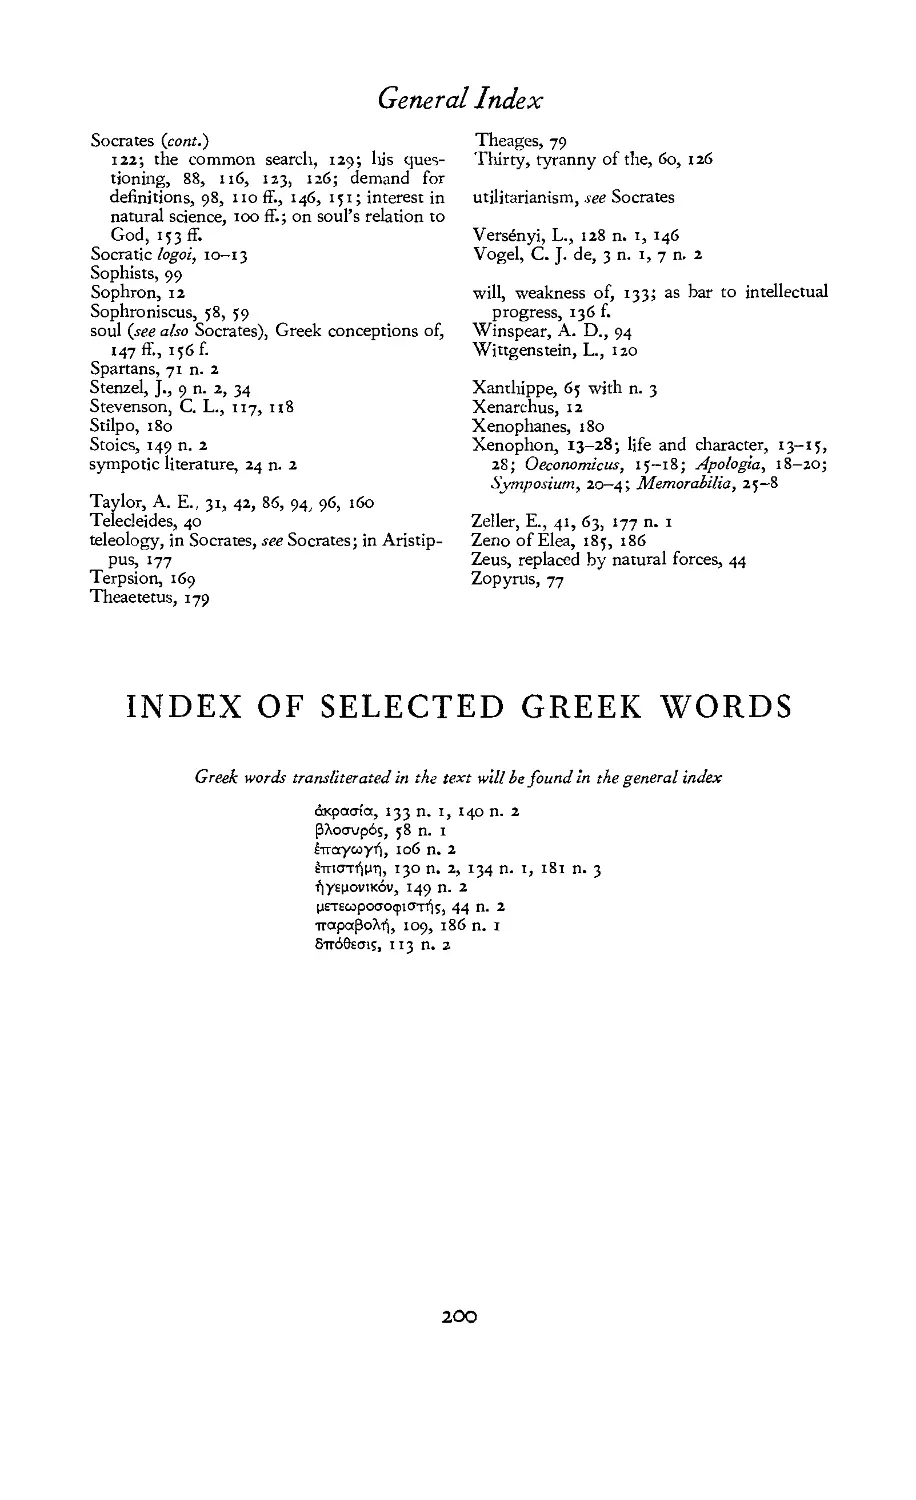 Index of selected Greek words